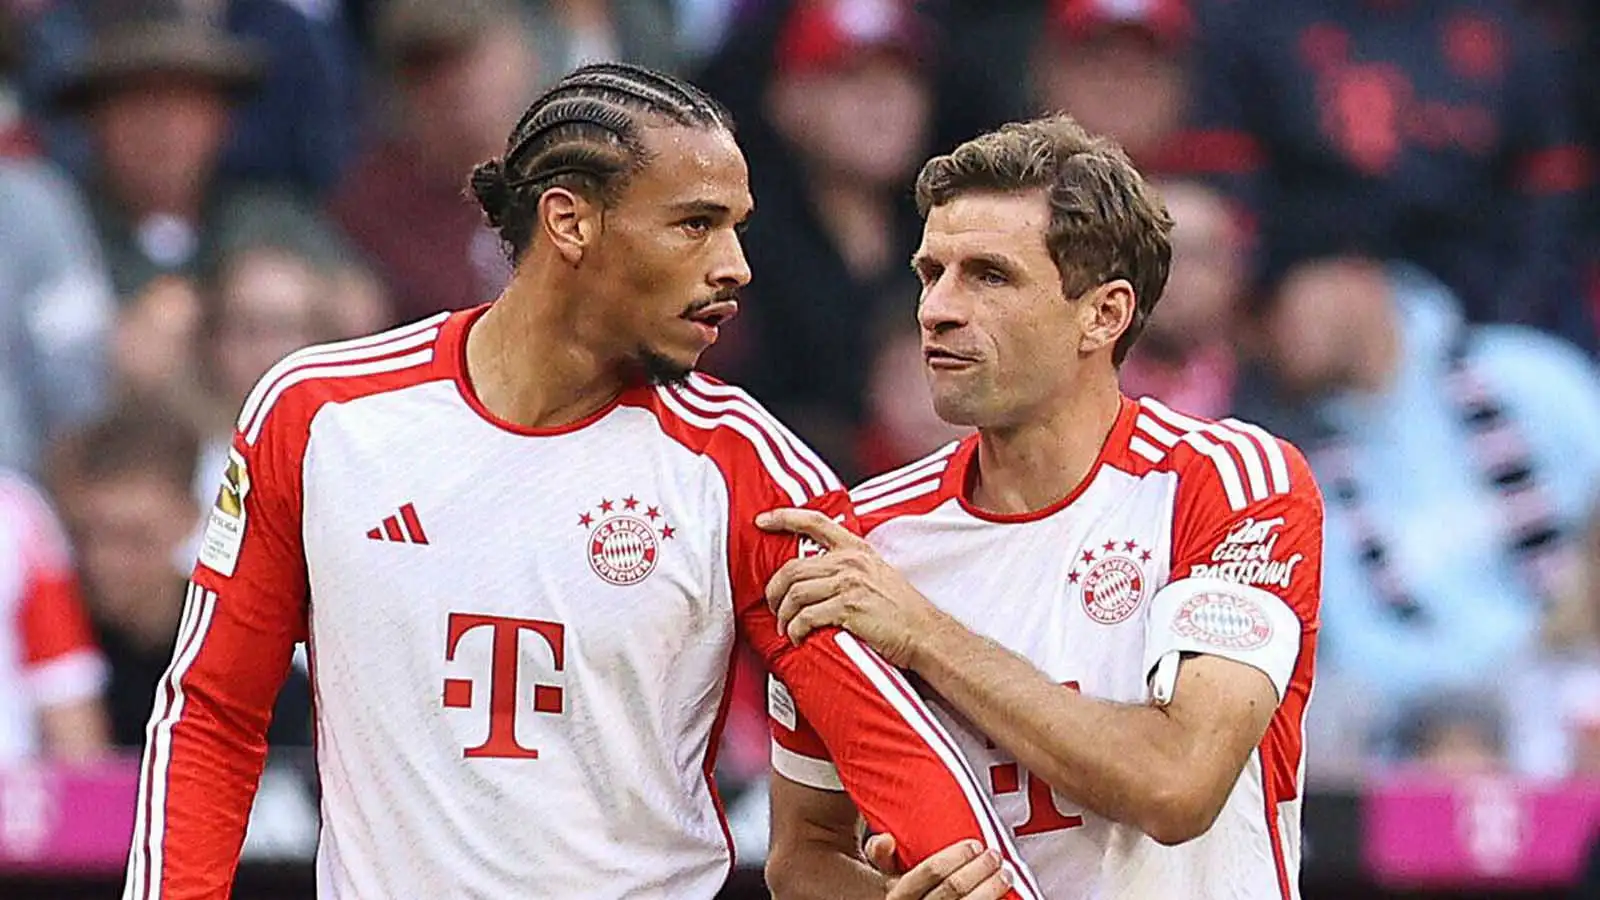 Leroy Sane and Thomas Muller of Bayern Munich